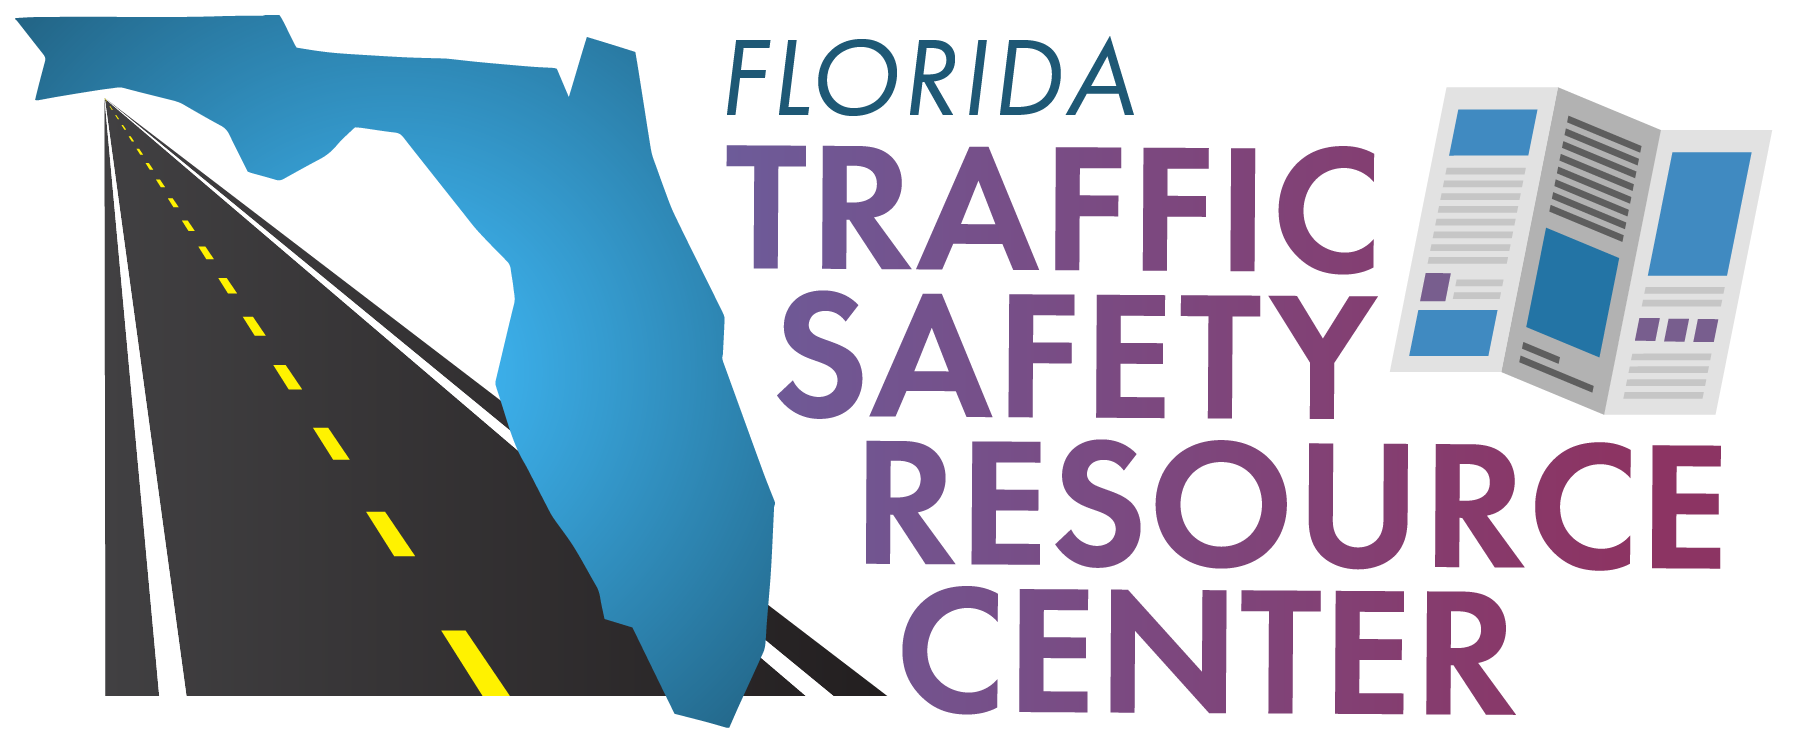 Resources, Transportation Safety, Injury Center